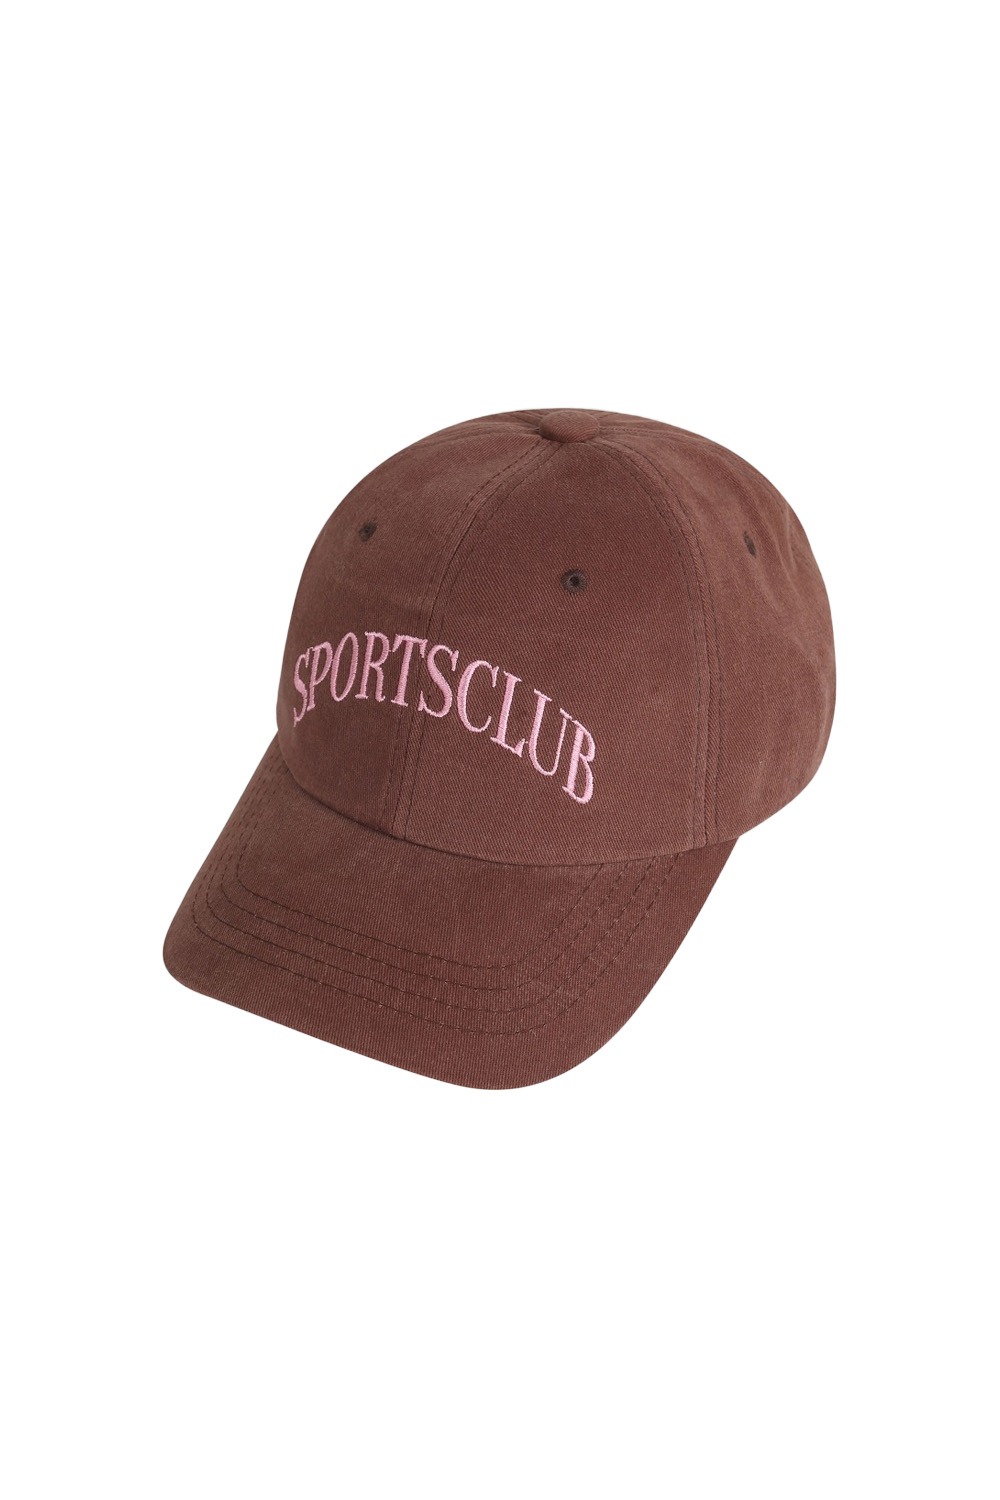 SPORTSCLUB BALL CAP (BROWN) RICHEZ